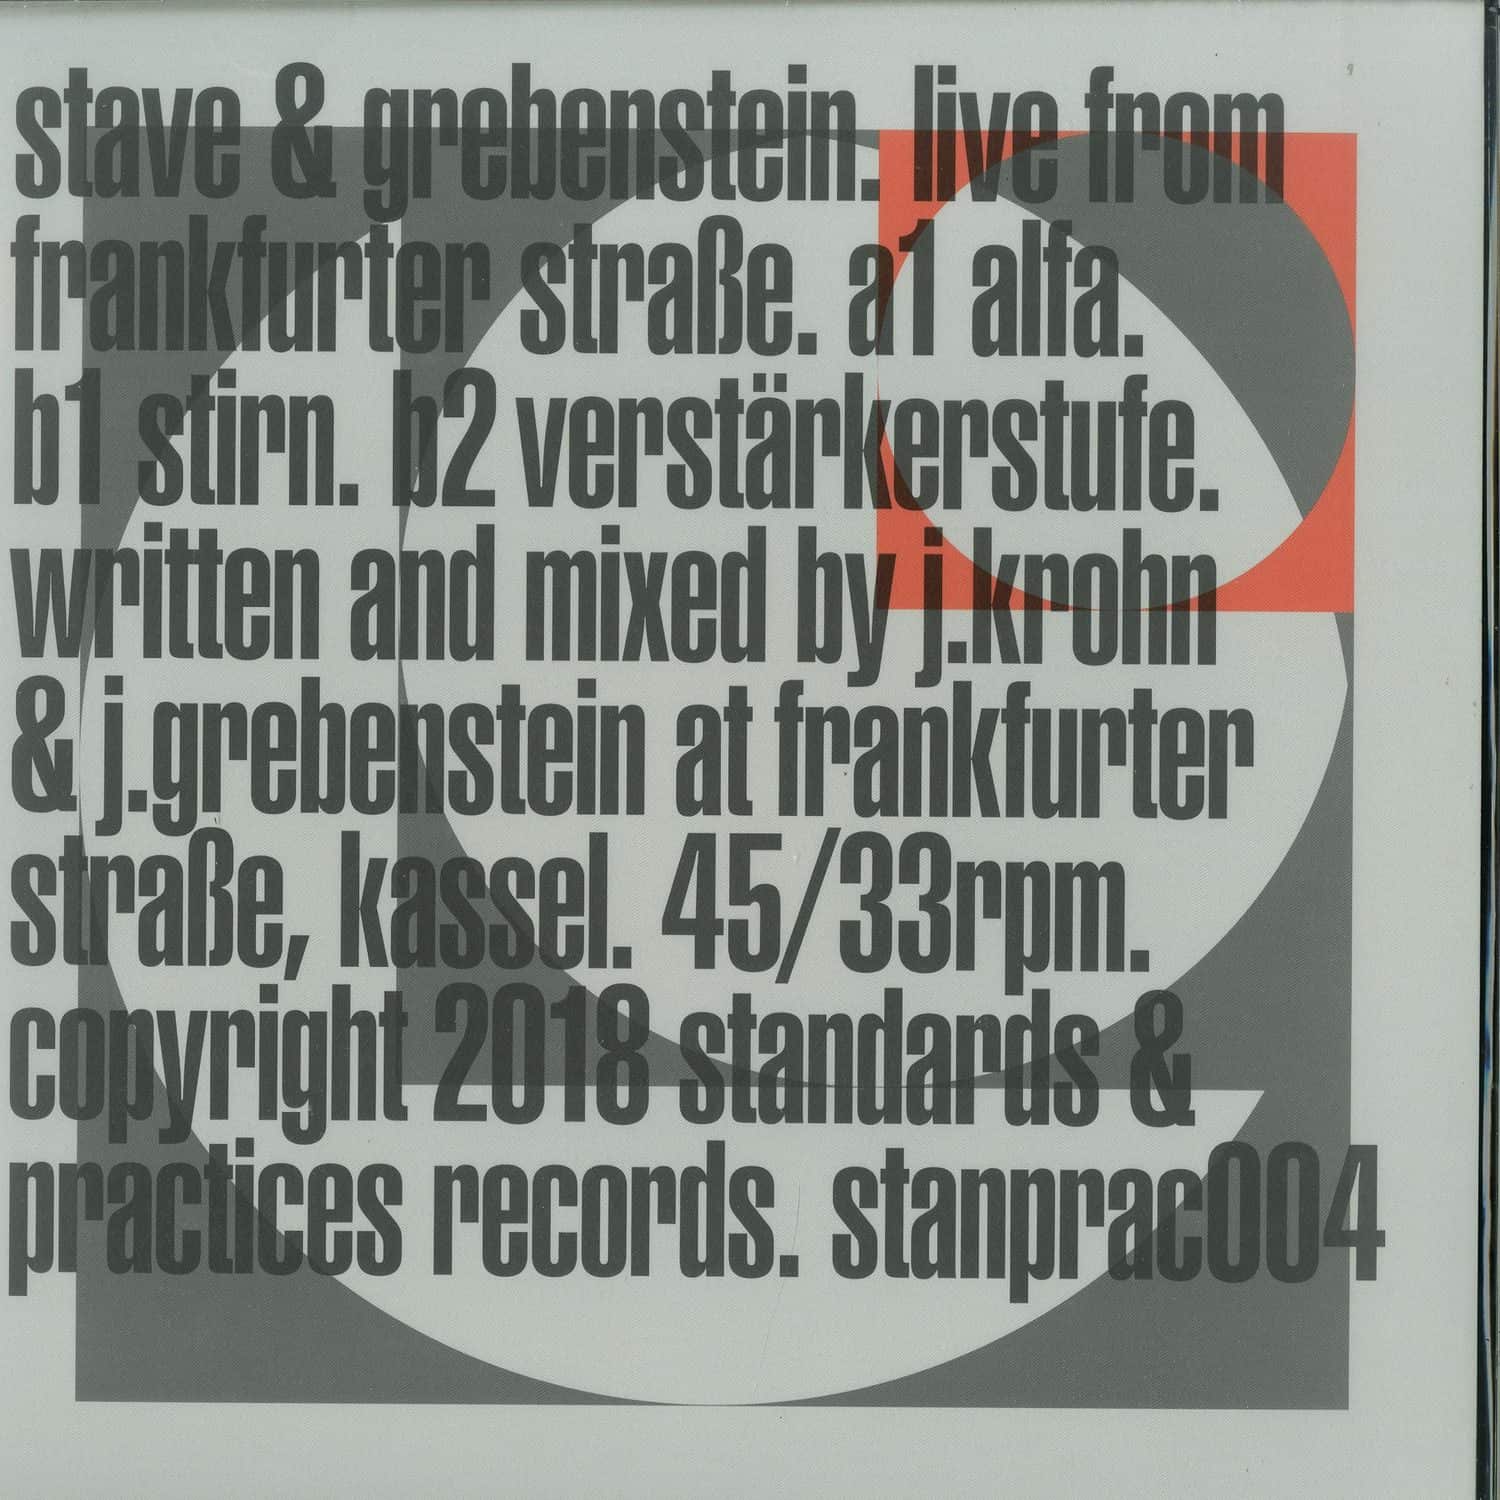 Stave & Grebenstein - LIVE FROM FRANKFURTER STRASSE 